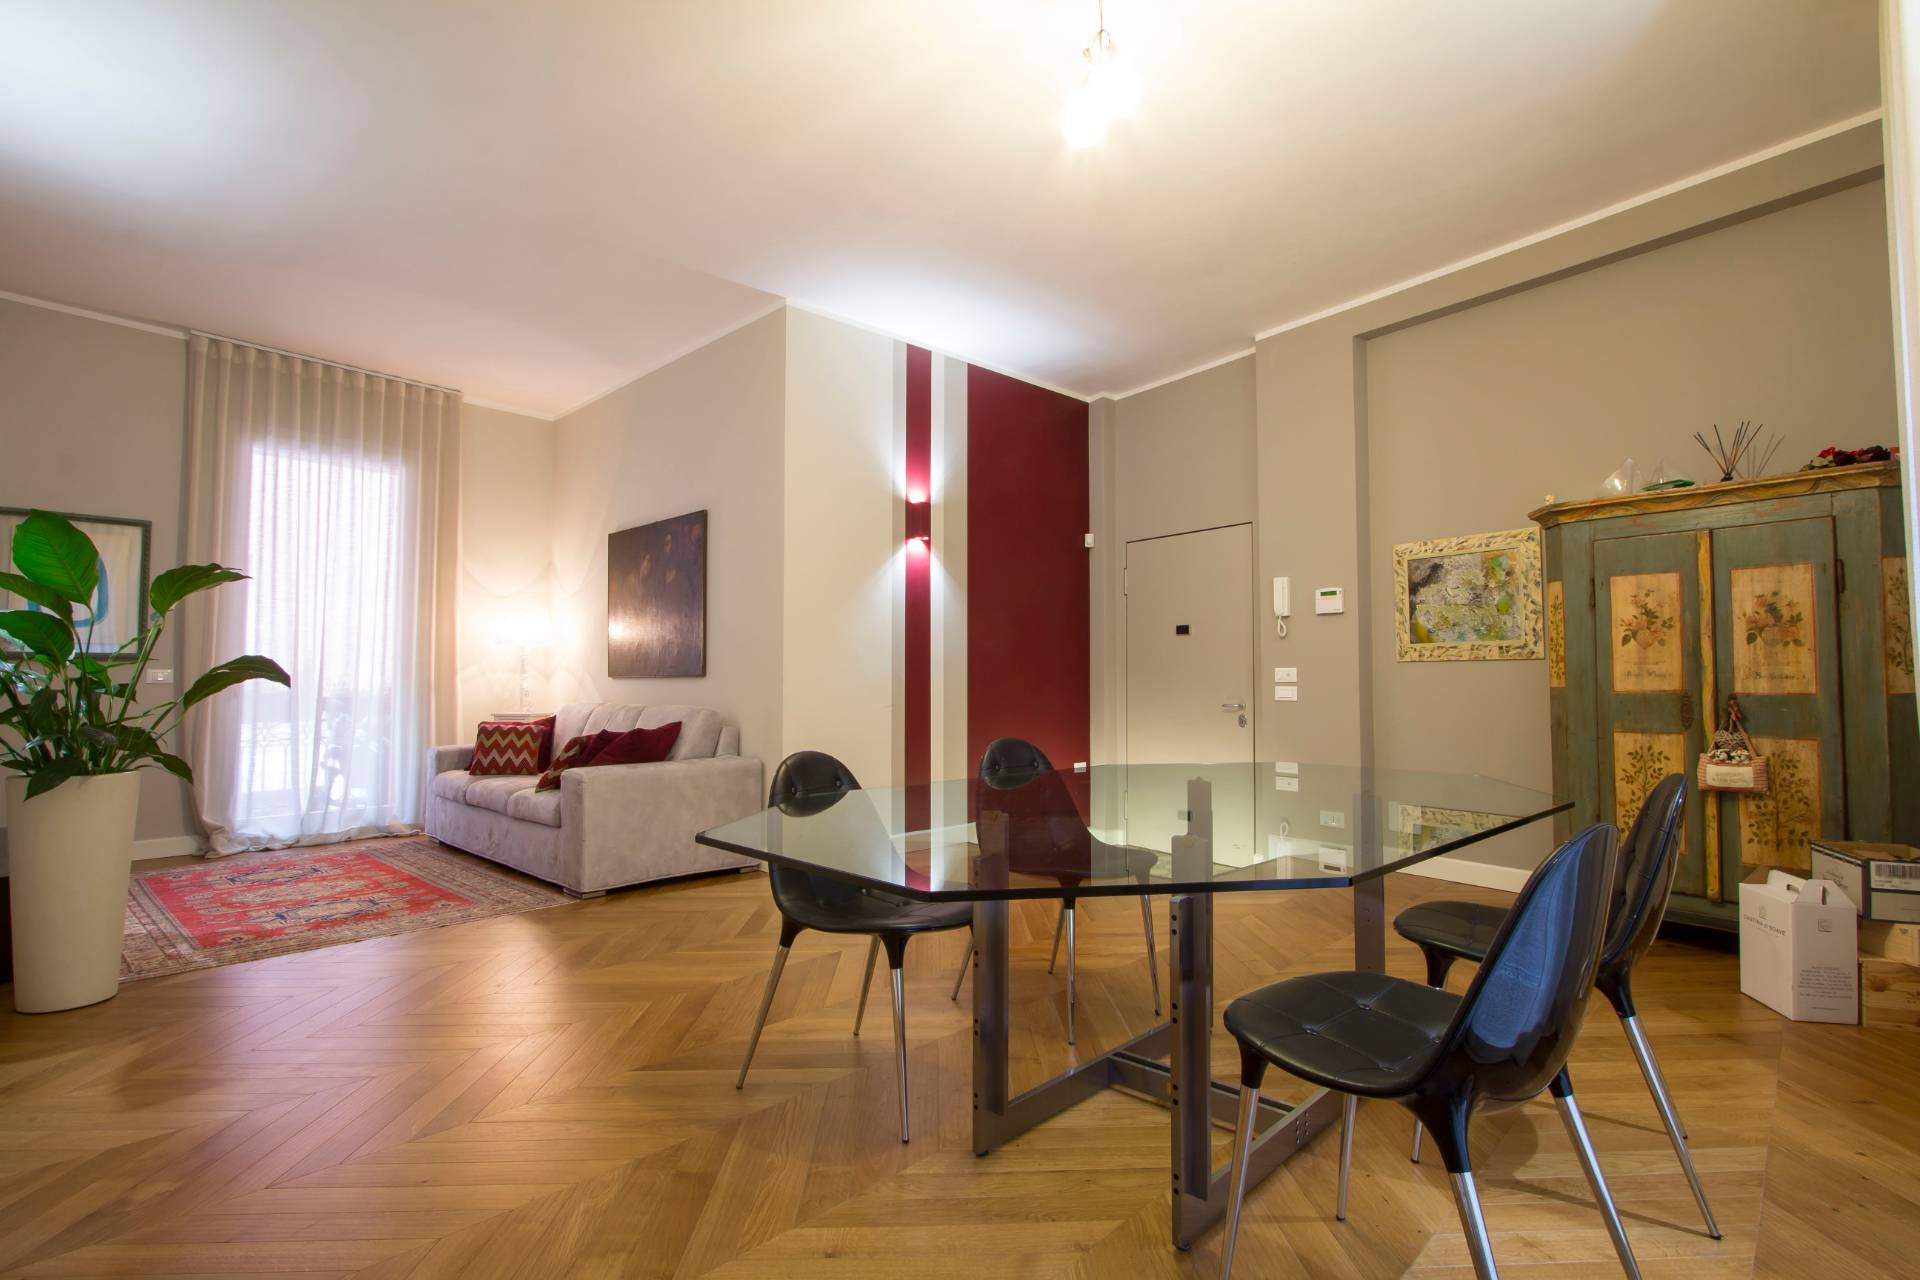 For sale apartment in city Verona Veneto